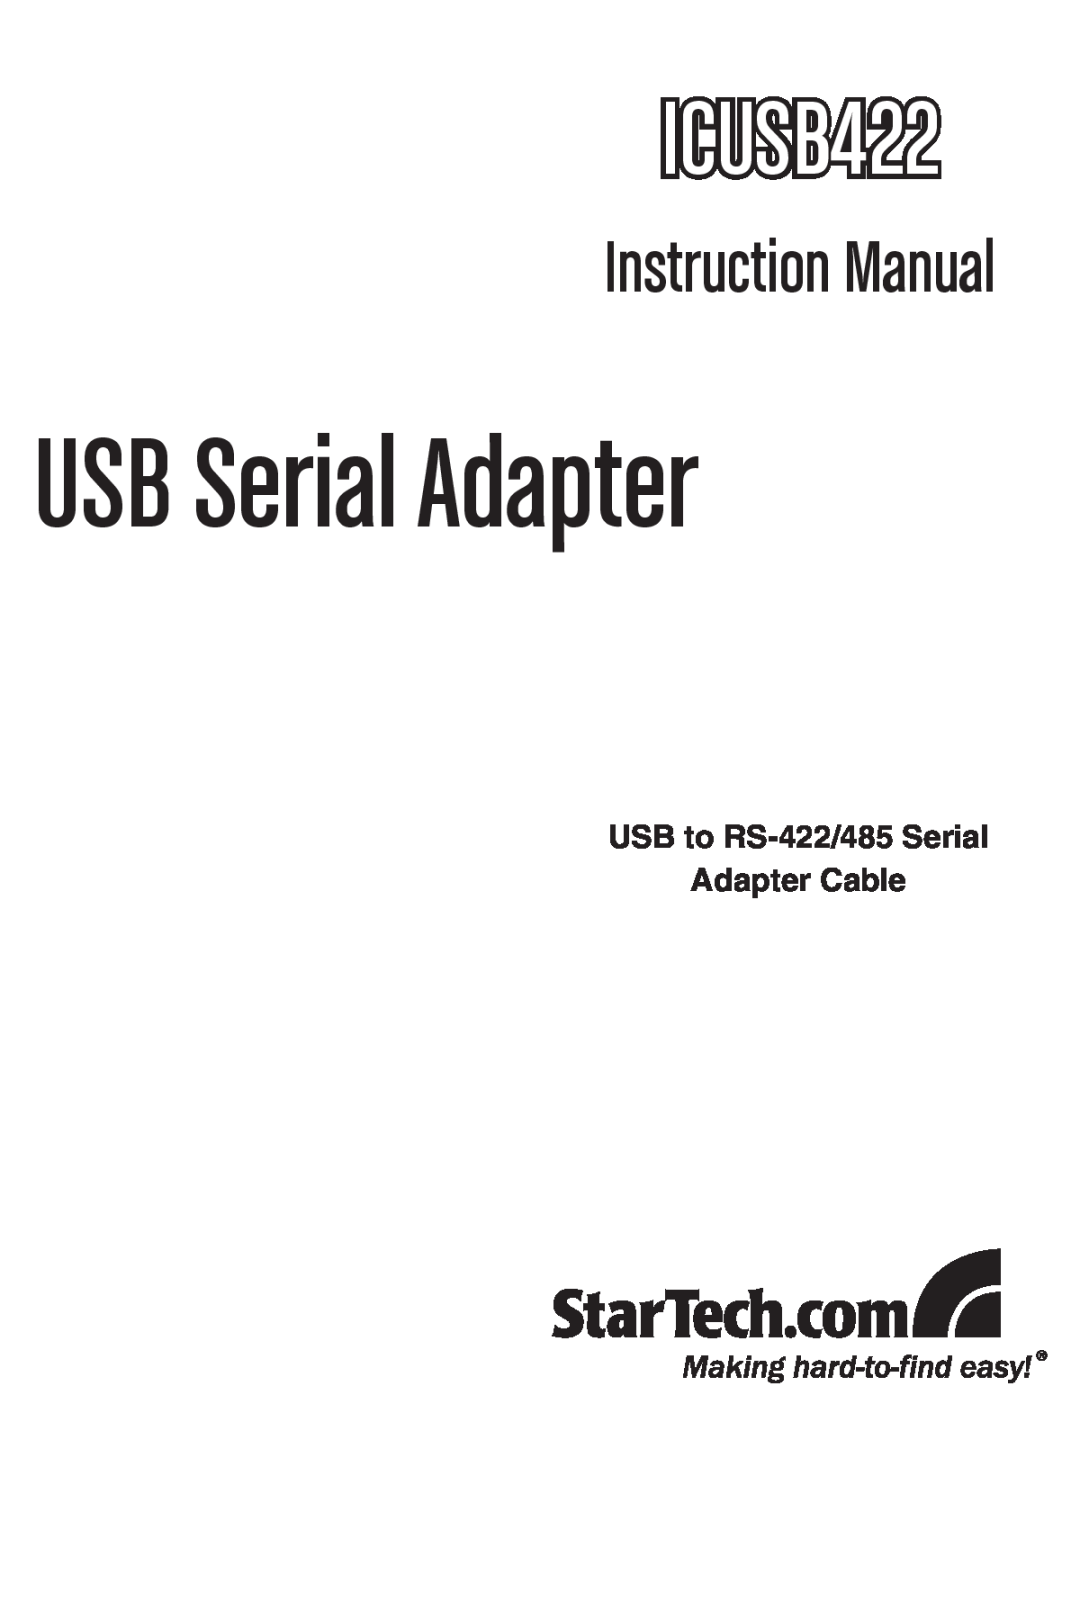 StarTech.com ICUSB422 instruction manual USB to RS-422/485 Serial Adapter Cable, USB Serial Adapter, Instruction Manual 